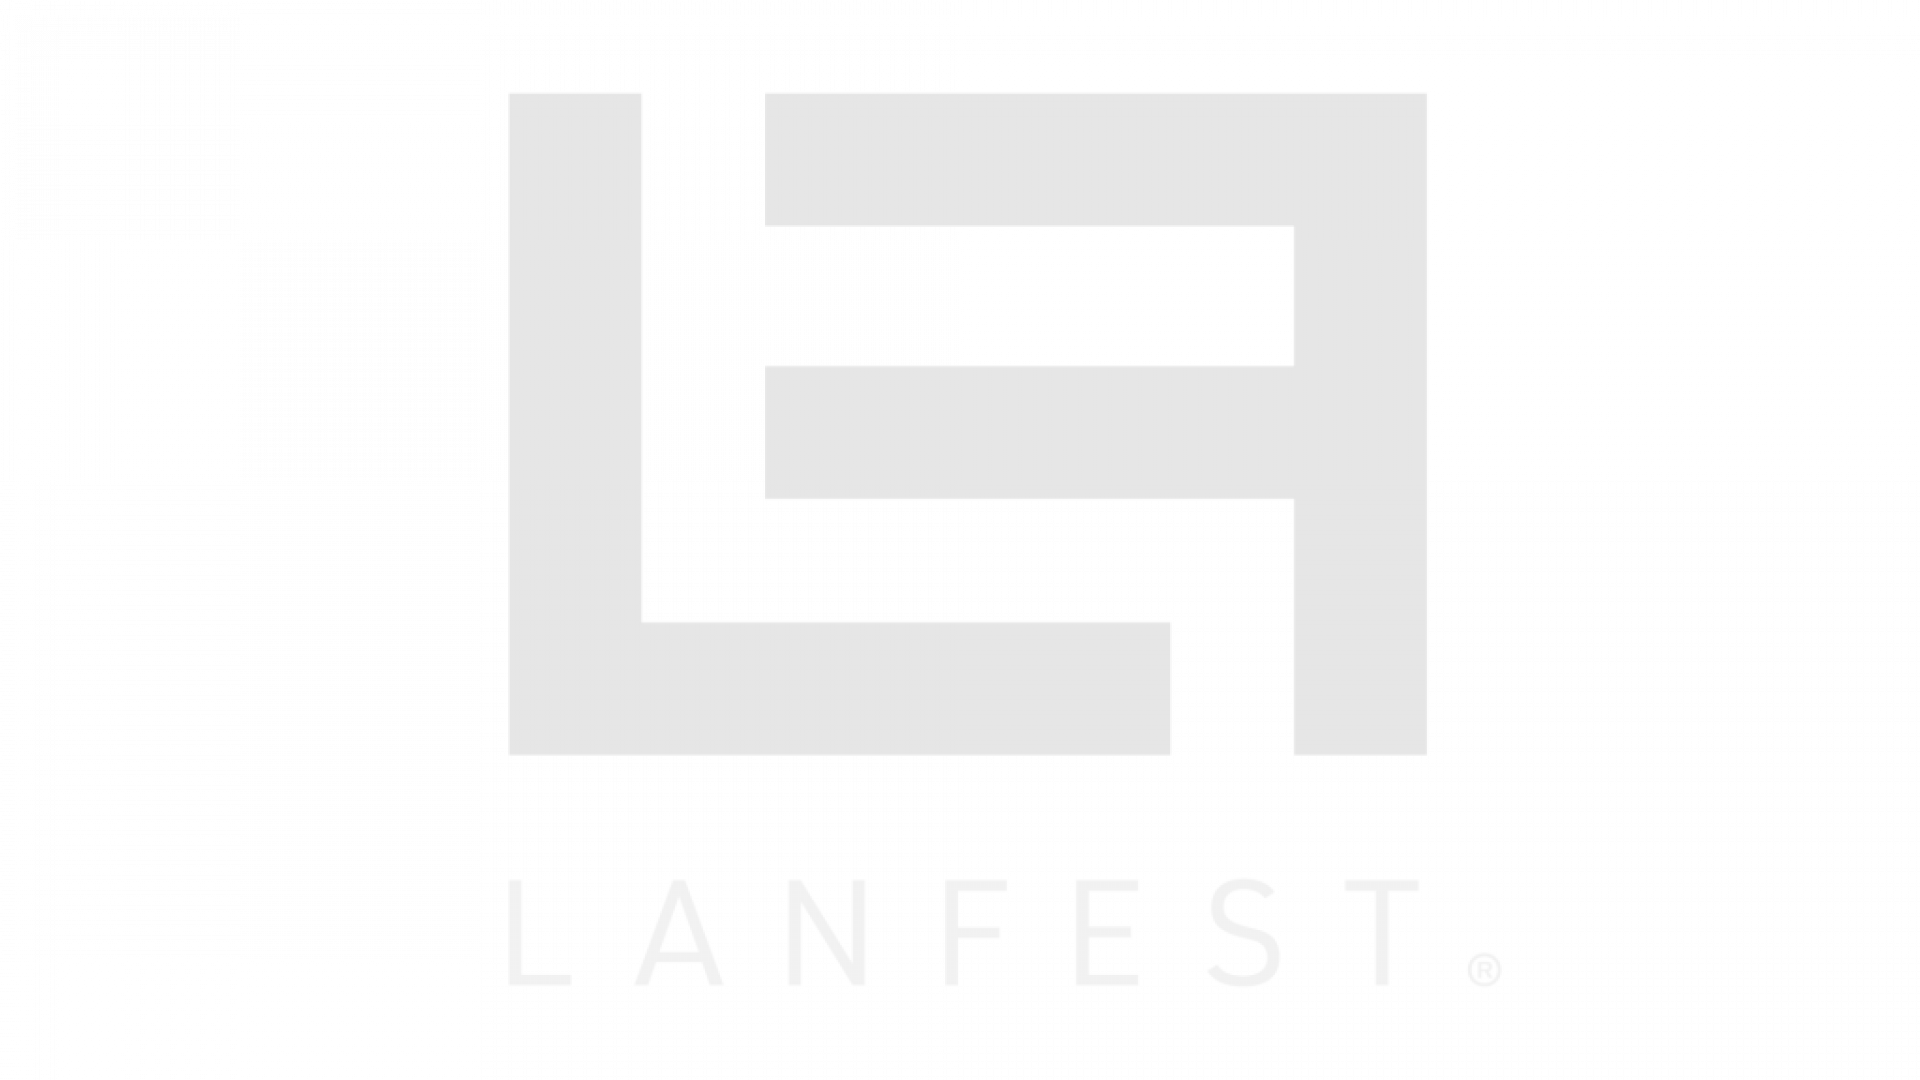 web charity logos - all white_lanfest